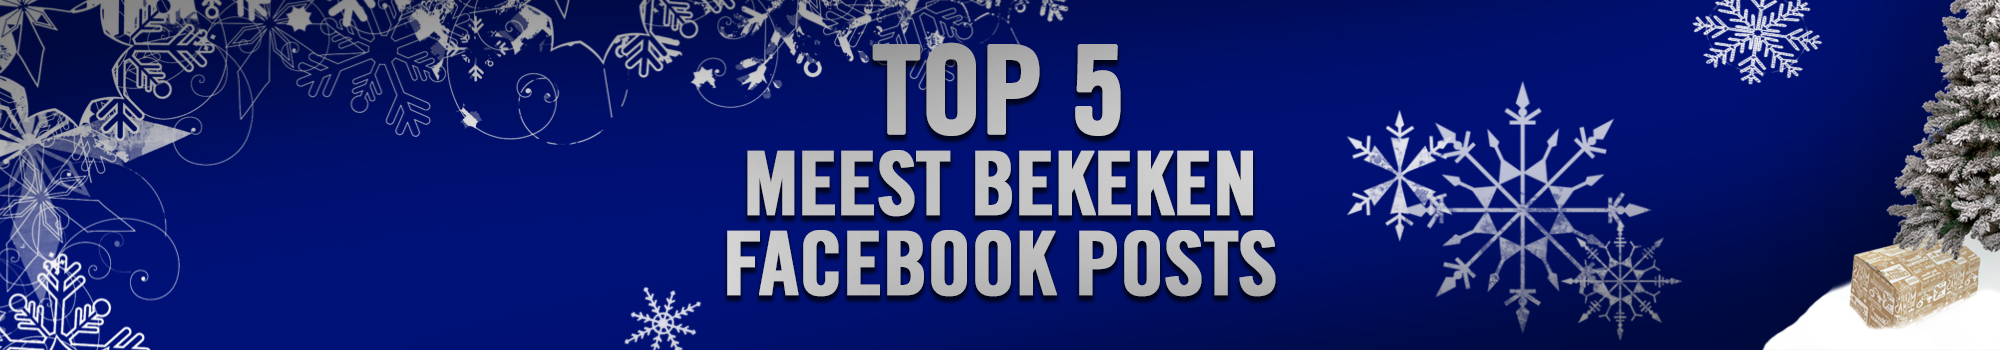 Top 5 Facebook